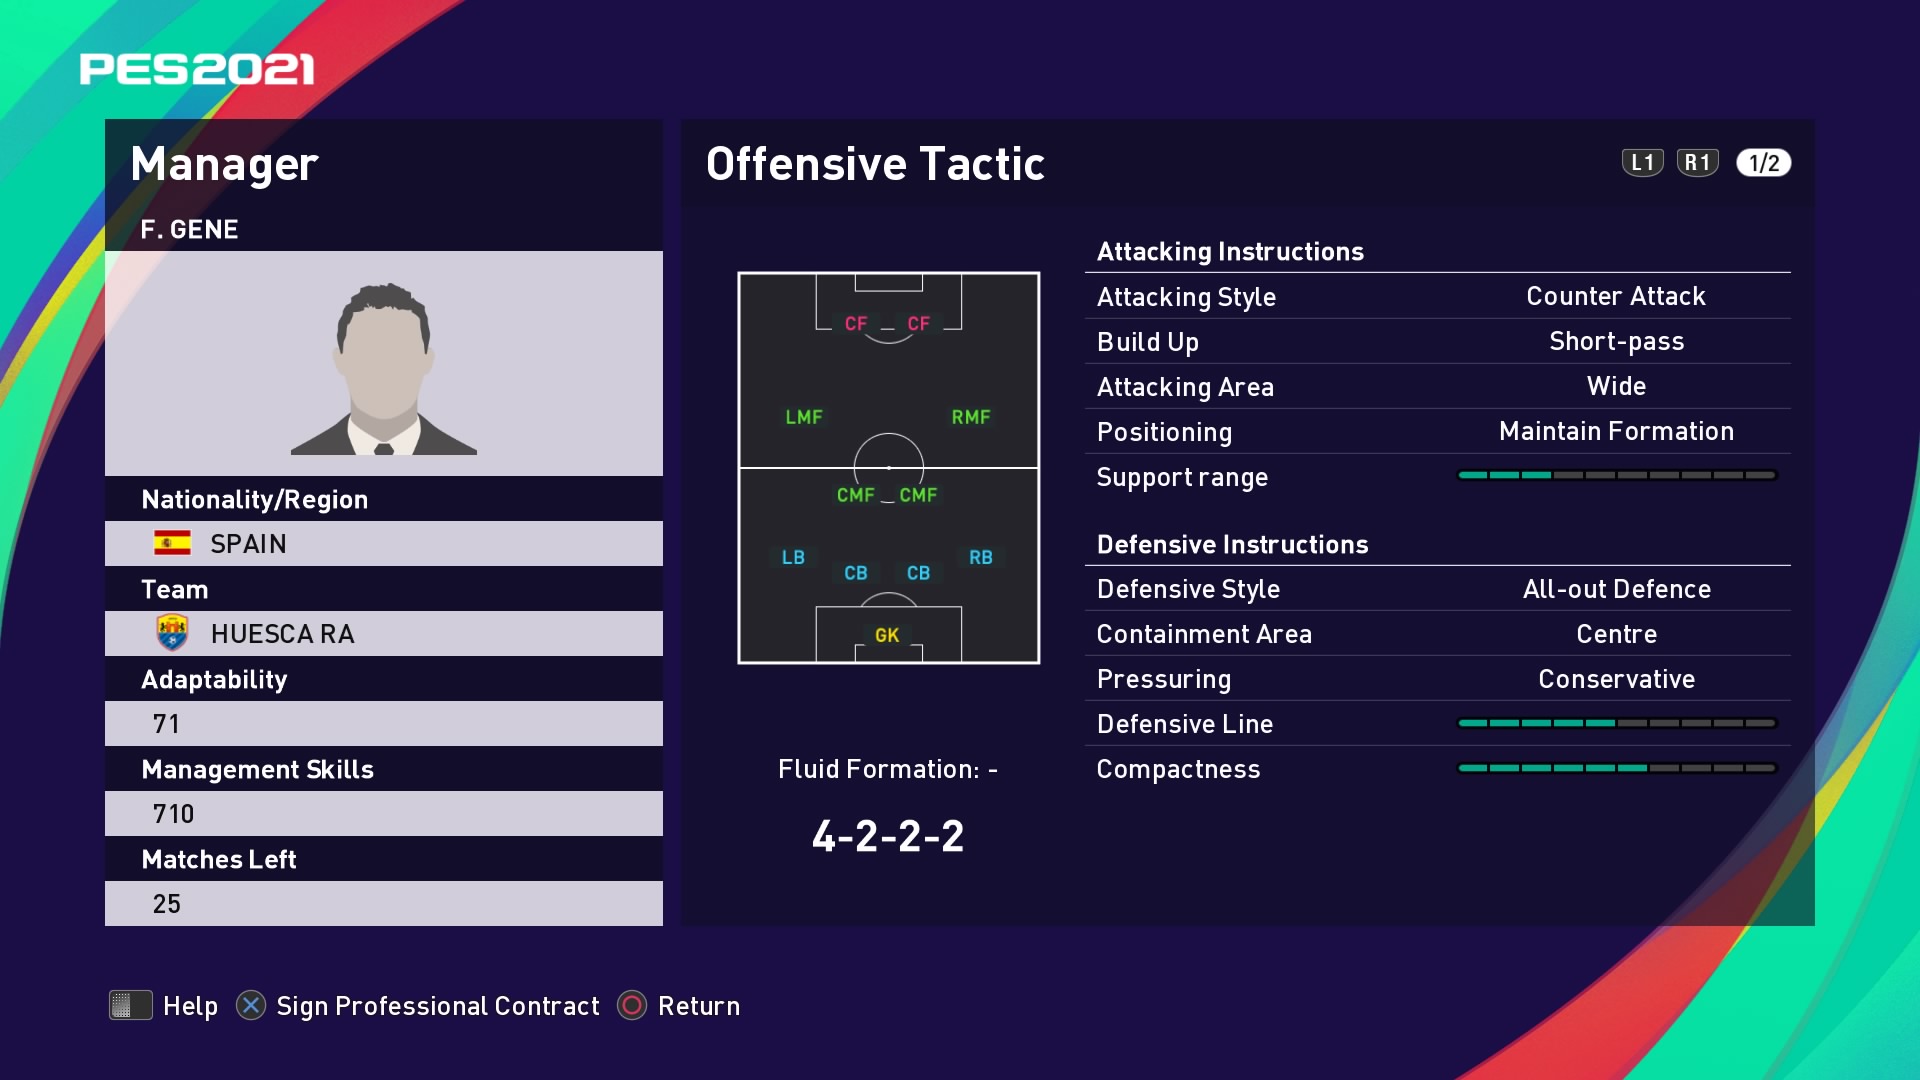 F. Gene (Míchel) Offensive Tactic in PES 2021 myClub